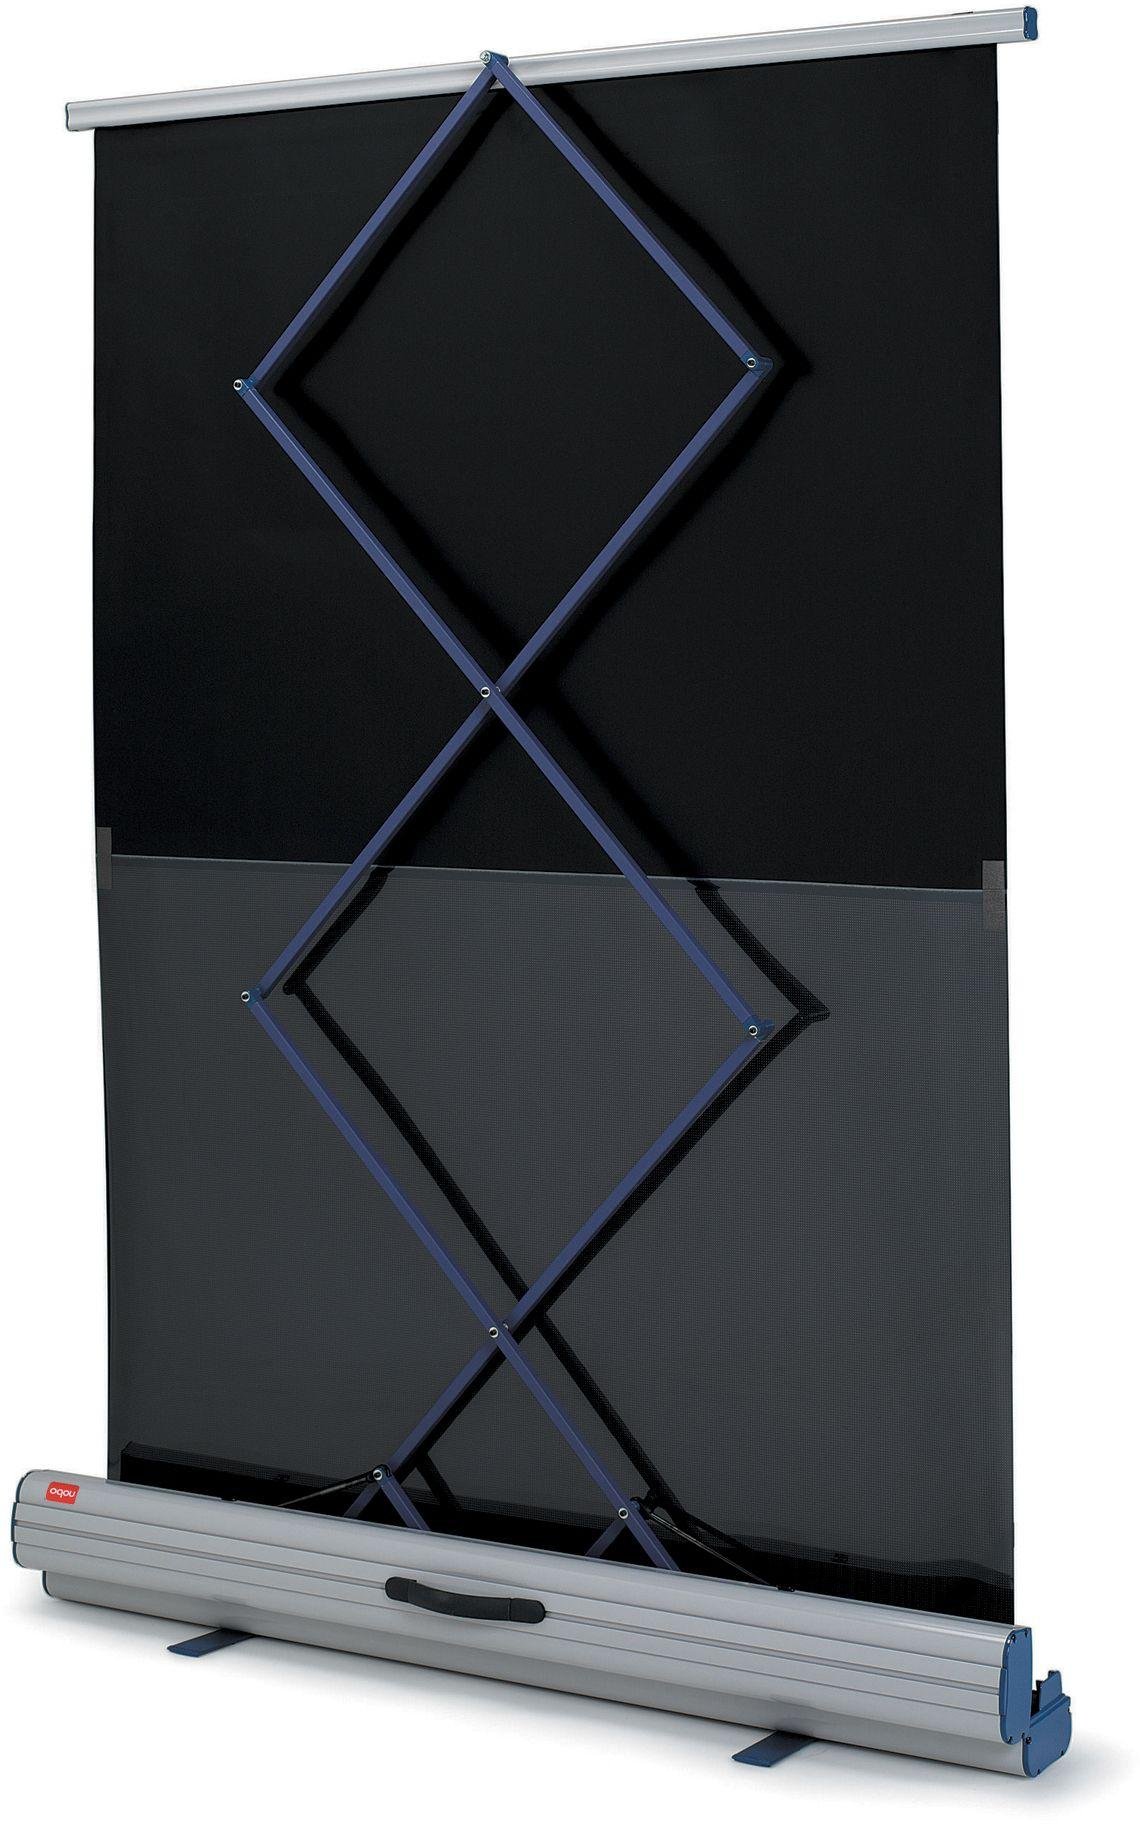 Buy Nobo Portable Floorstanding Projector Screen - 91x122cm at Argos.co